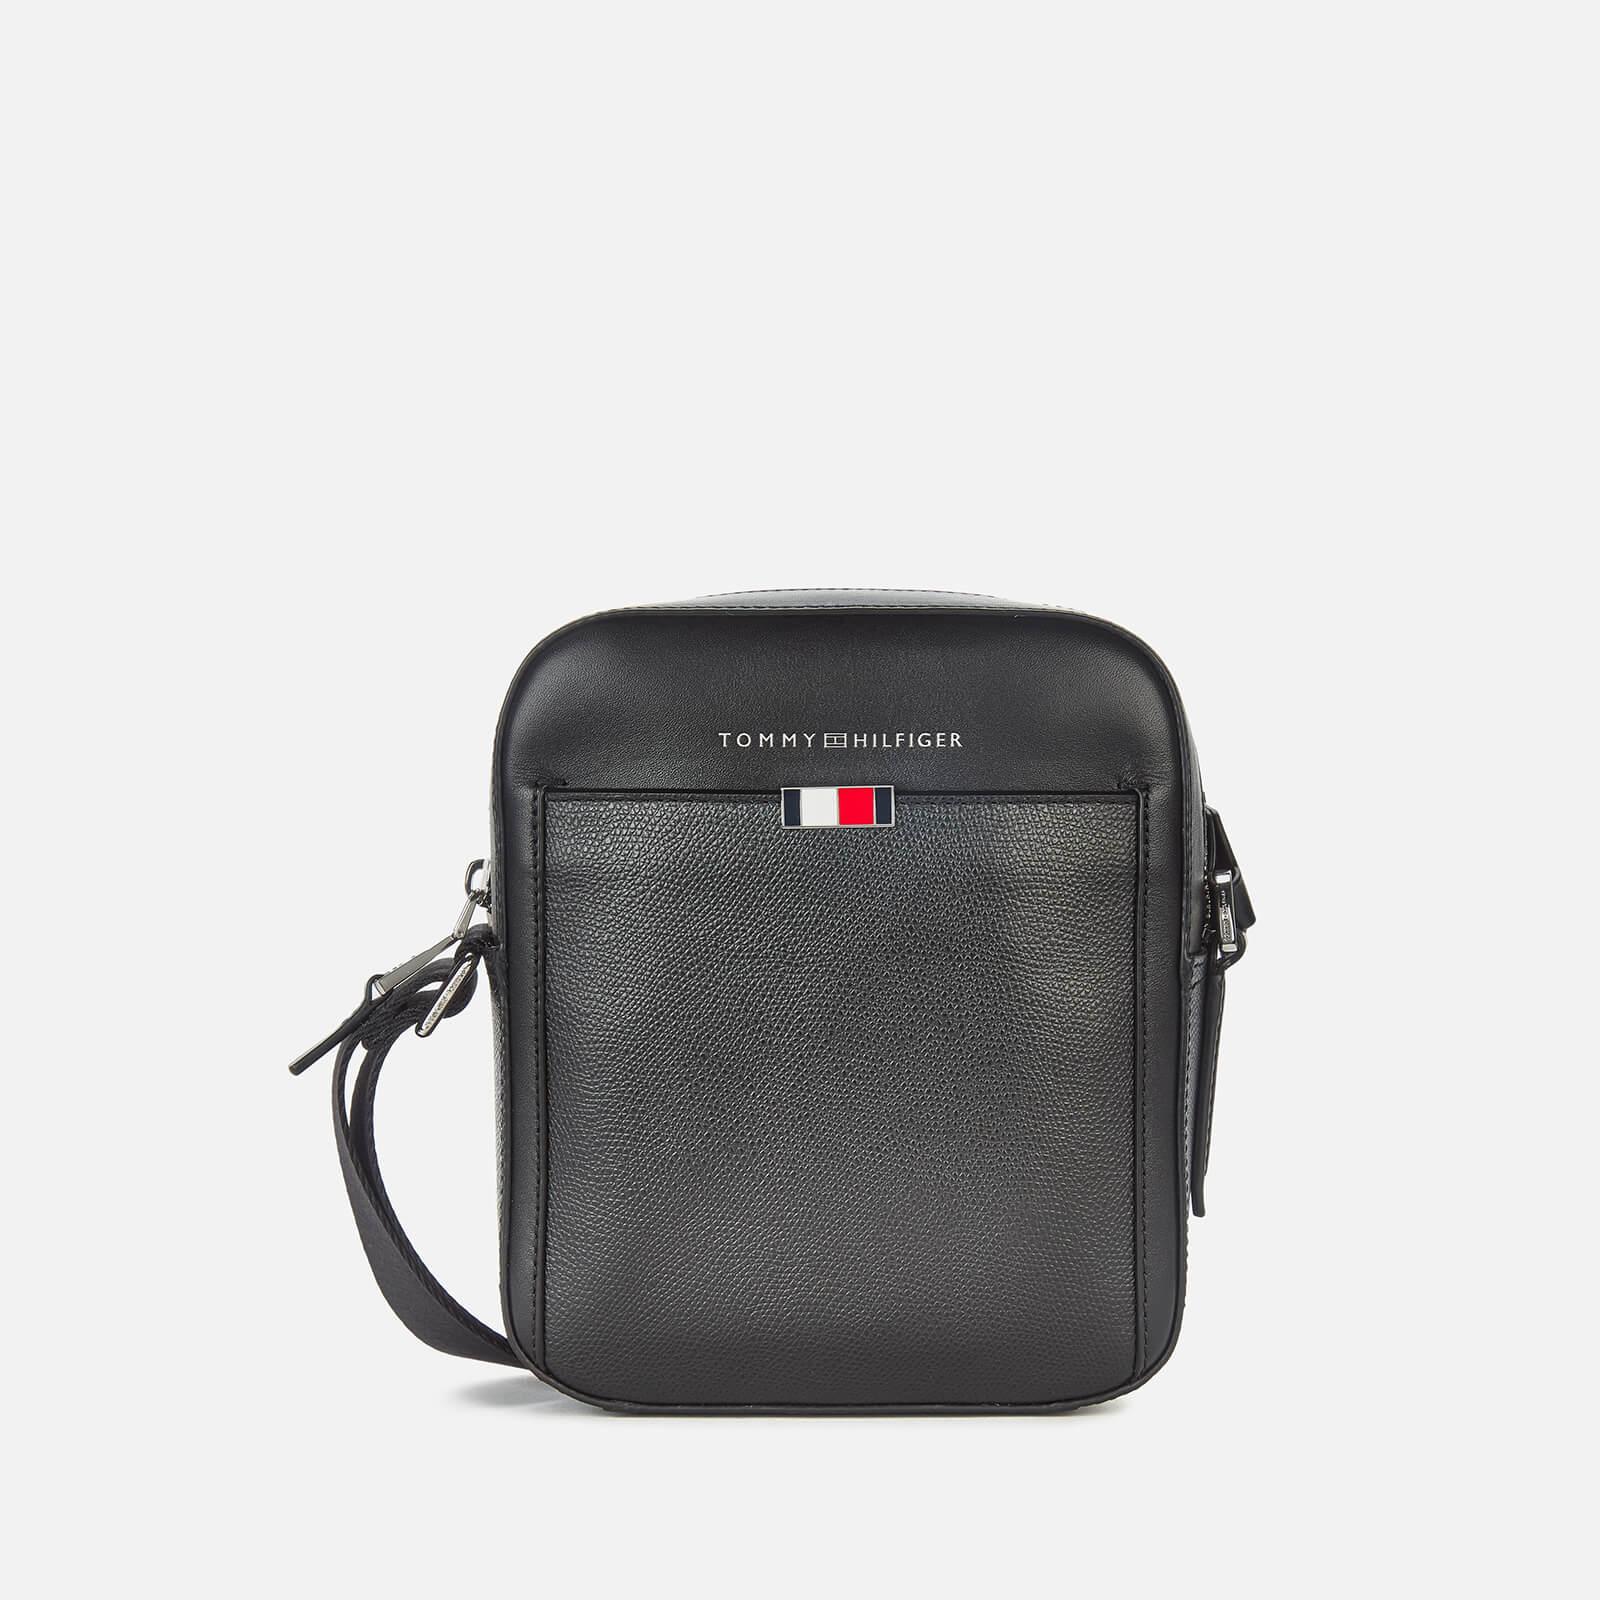 Tommy Hilfiger Business Leather Mini Reporter Bag in Black for Men - Lyst